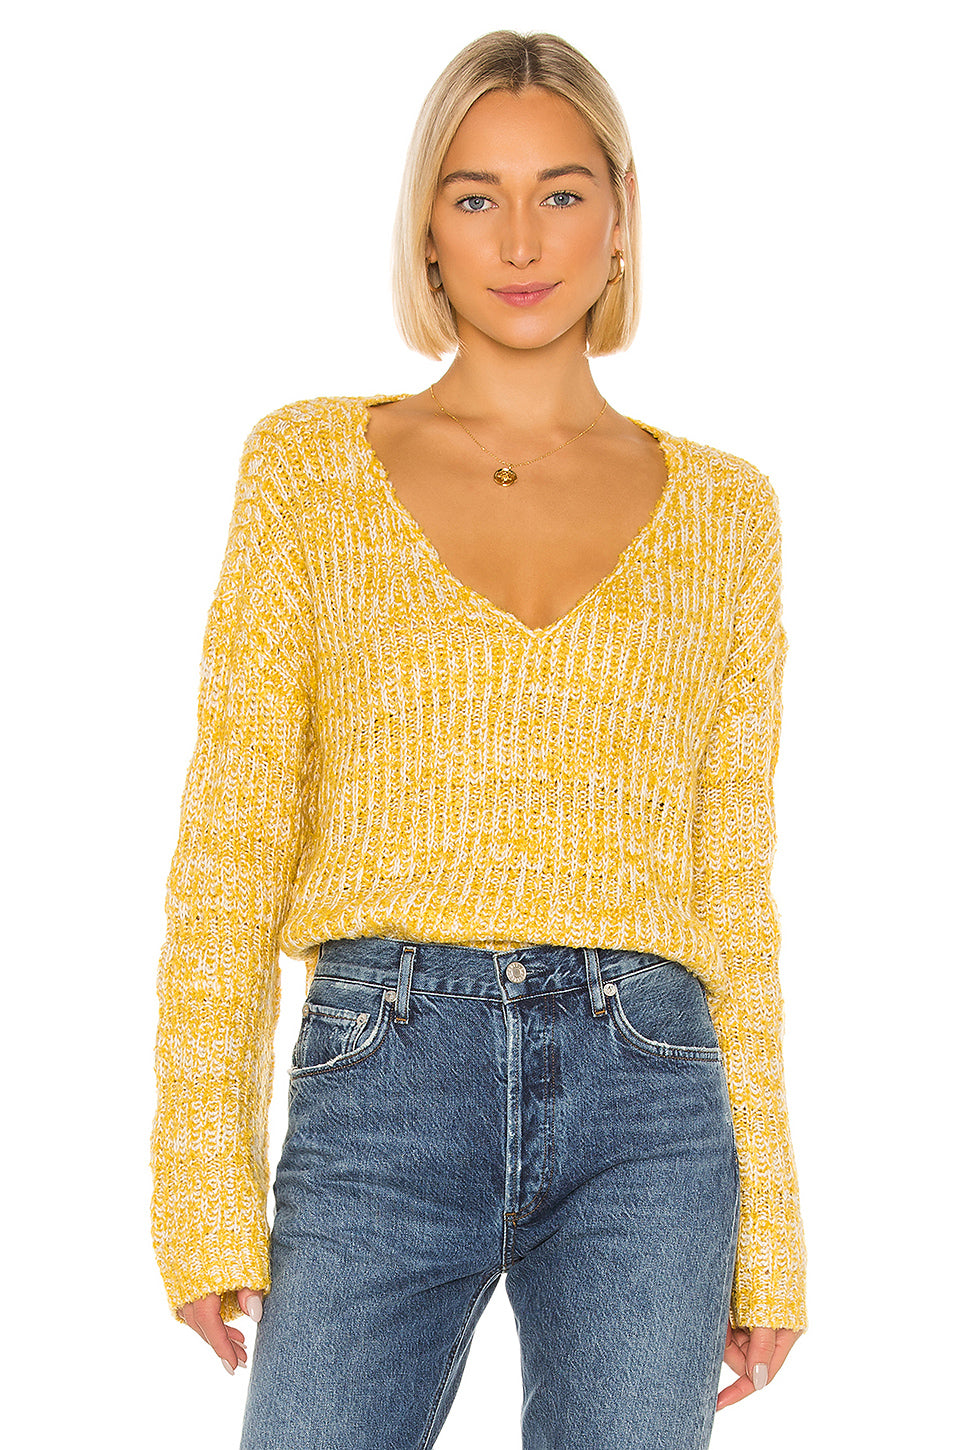 Kat Sweater in YELLOW